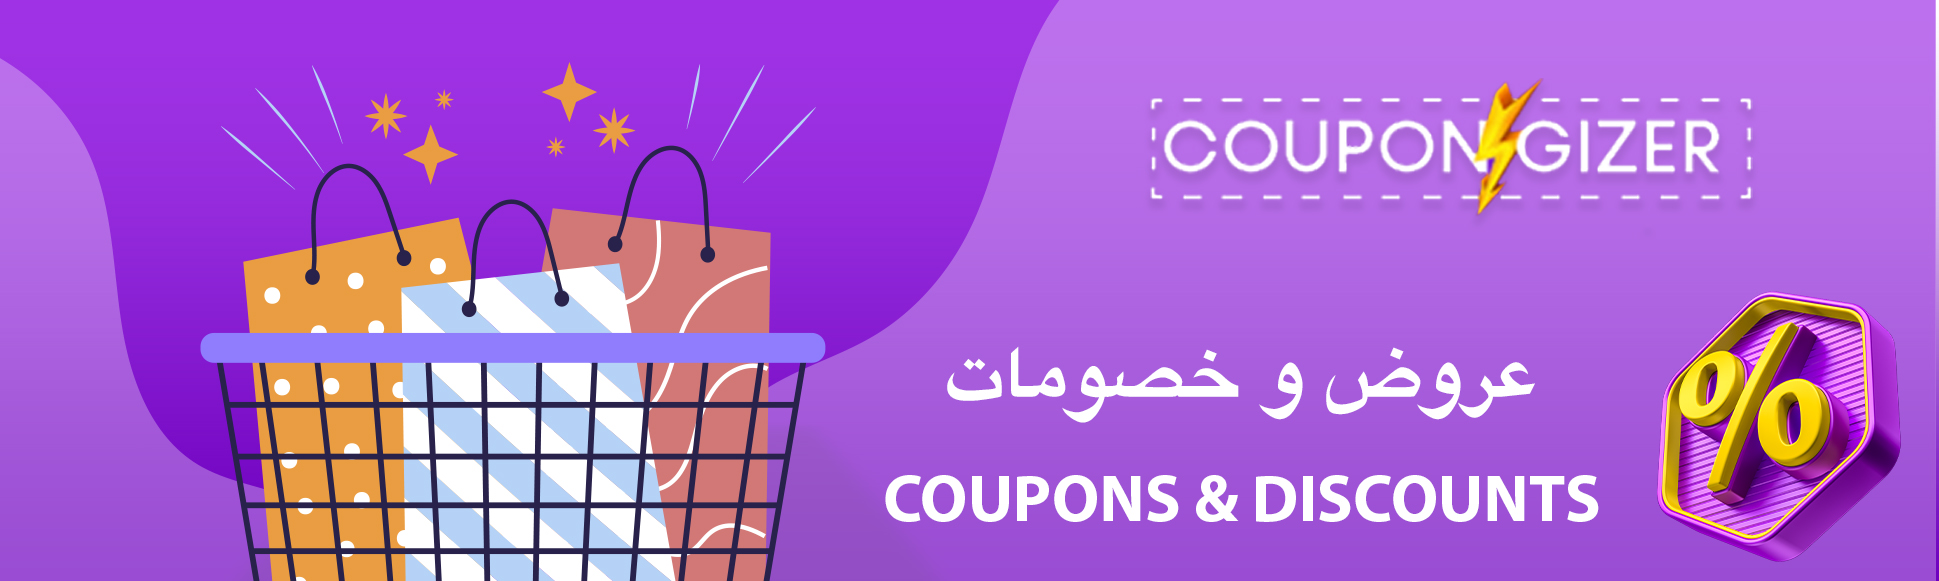 coupongizer Discount Codes